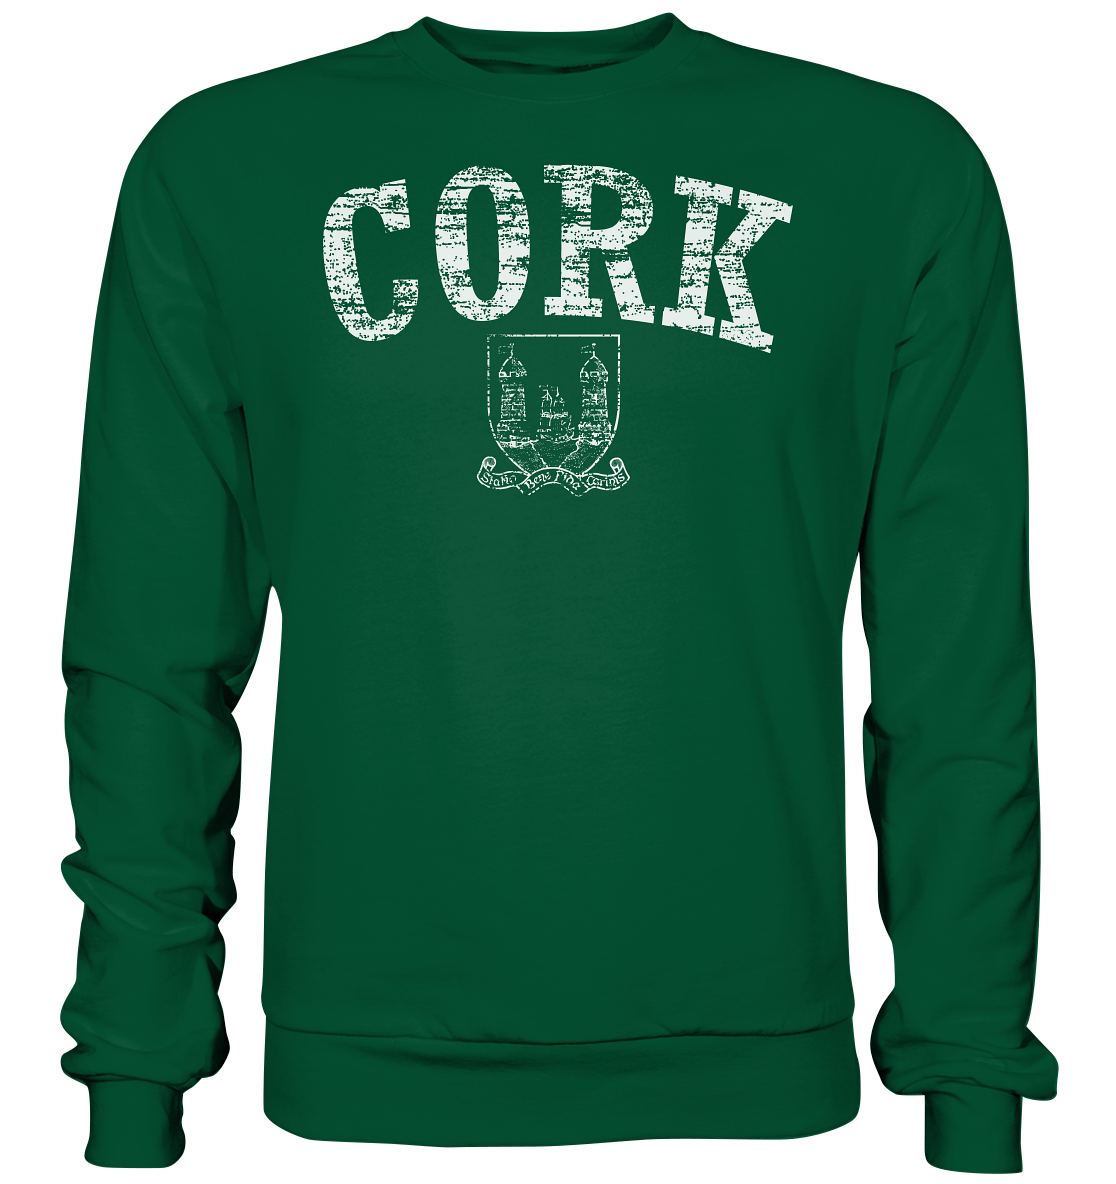 "Cork - Statio Bene Fida Carinis" - Basic Sweatshirt